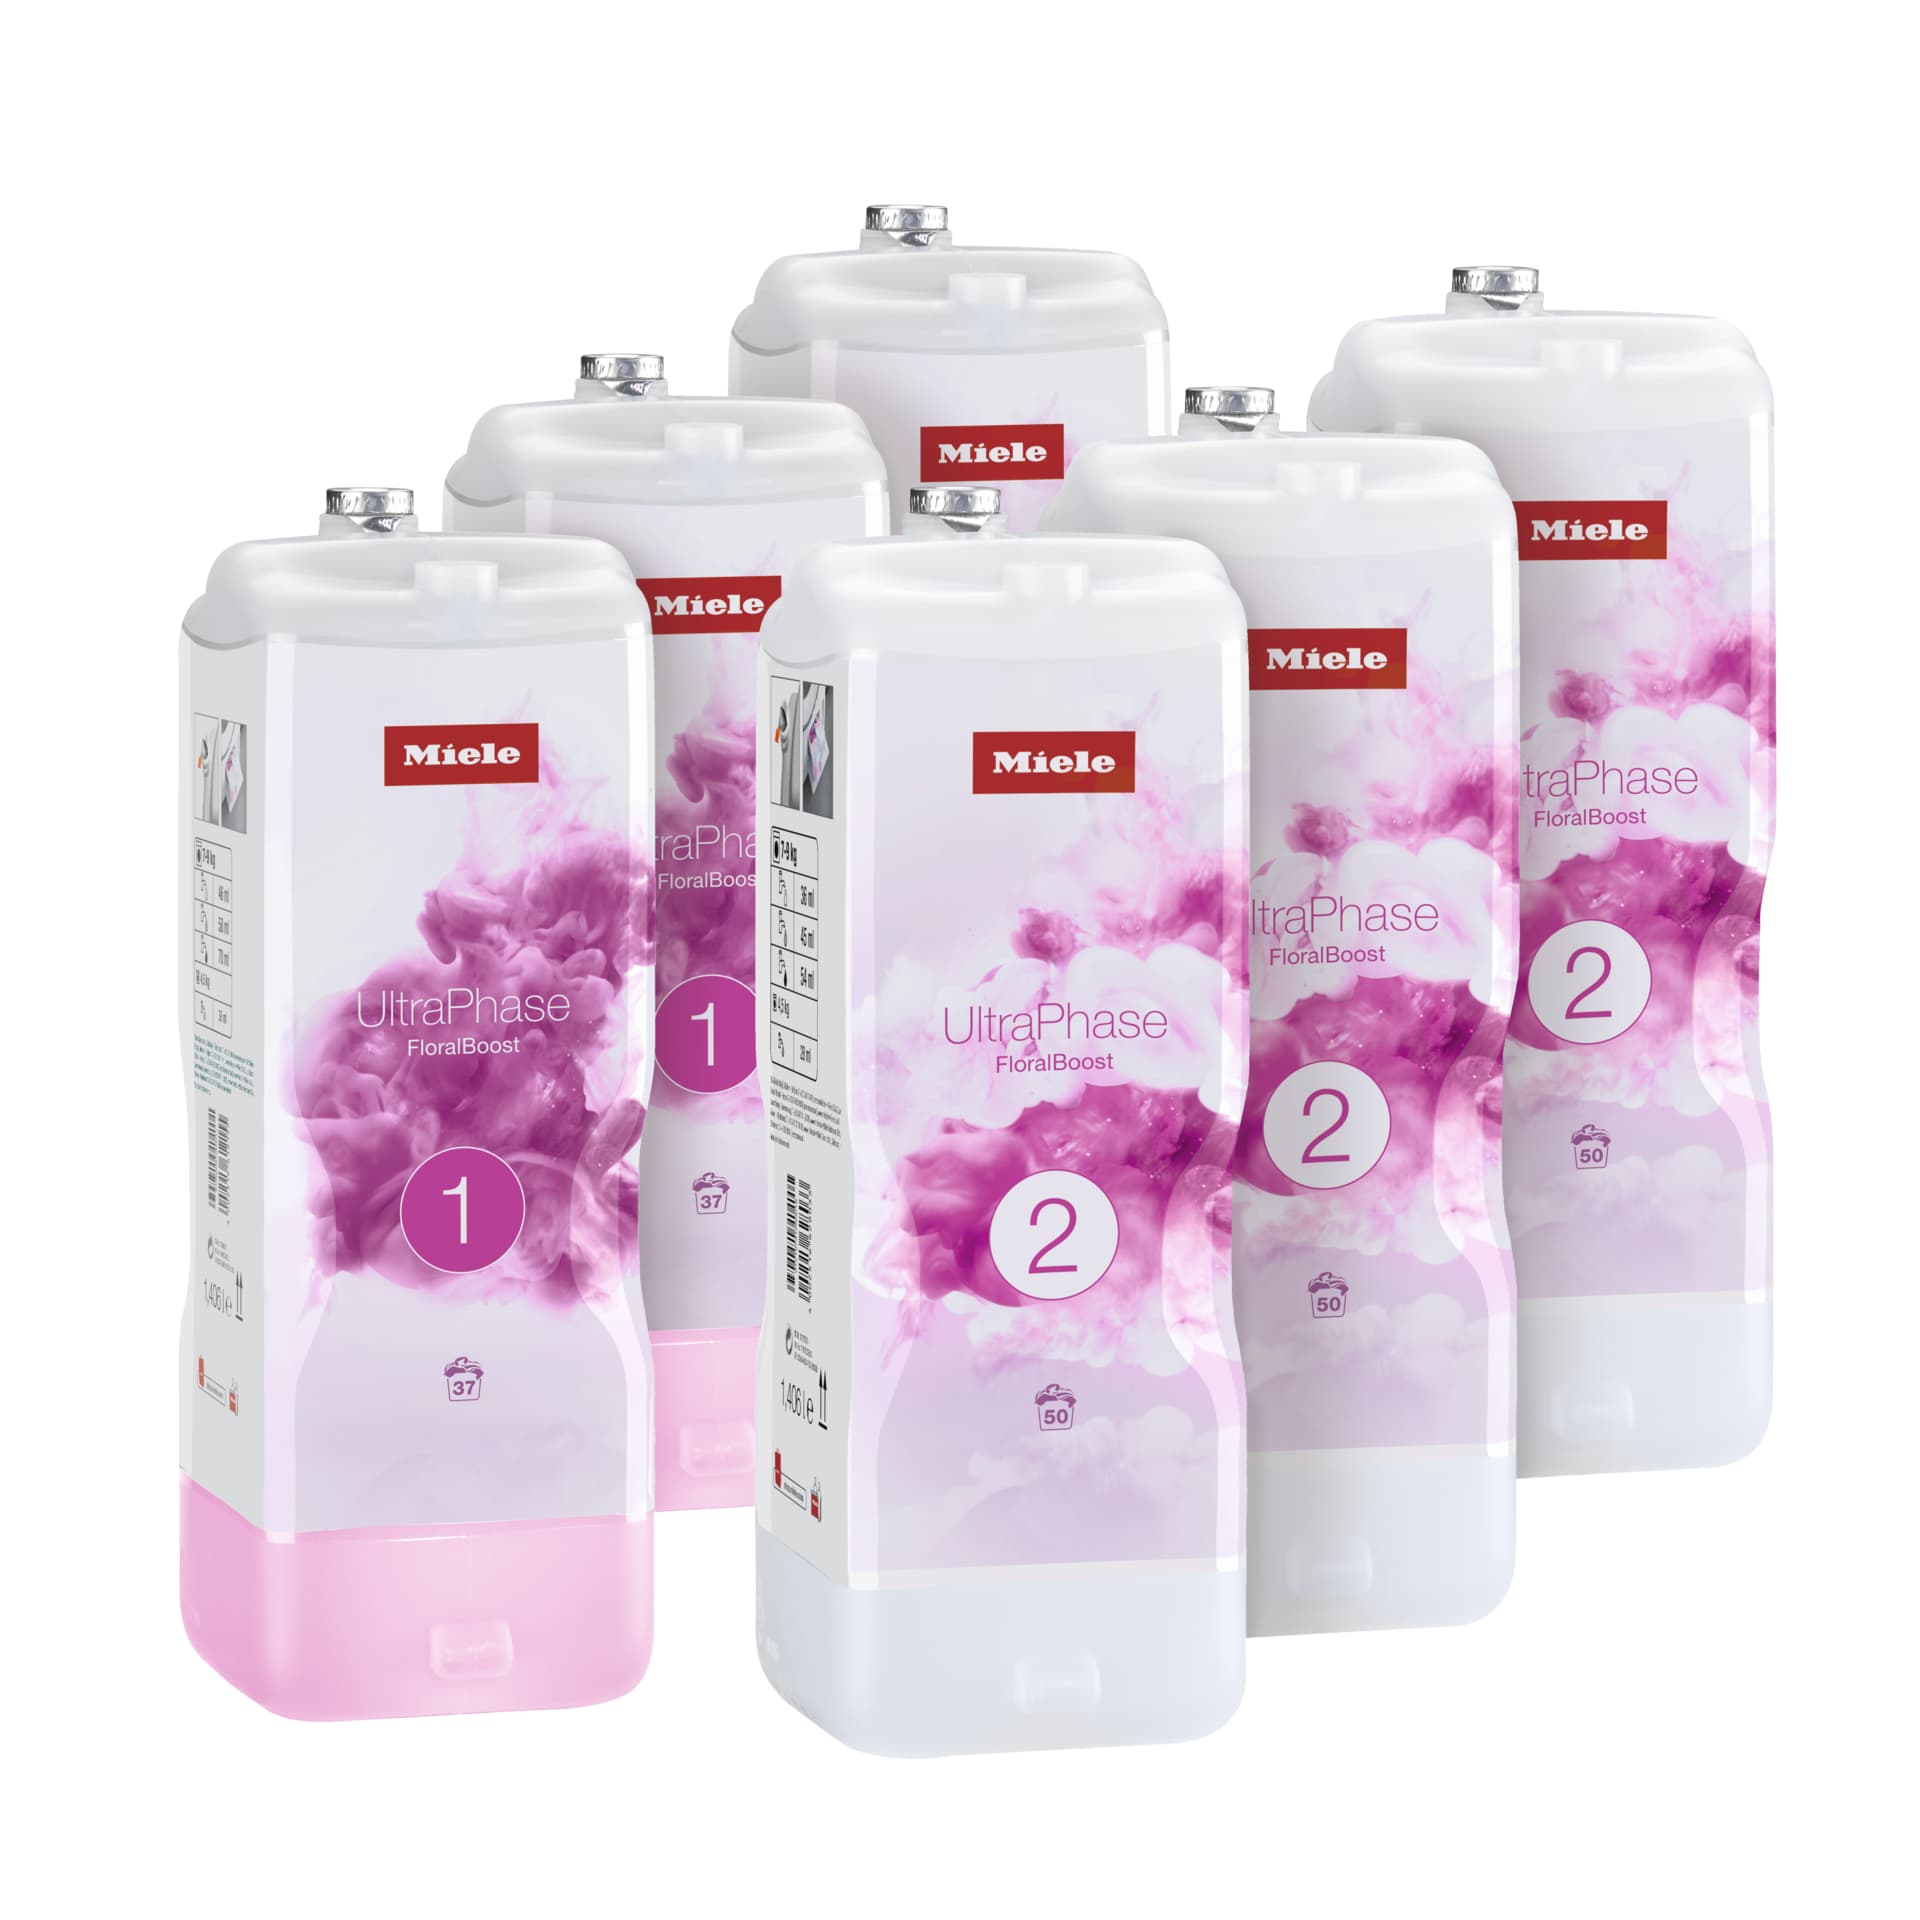 Miele Waschmittel Set 6 UltraPhase FloralBoost Miele UltraPhase 1 und 2 FloralBoost Vorratspaket der Limited Edition 